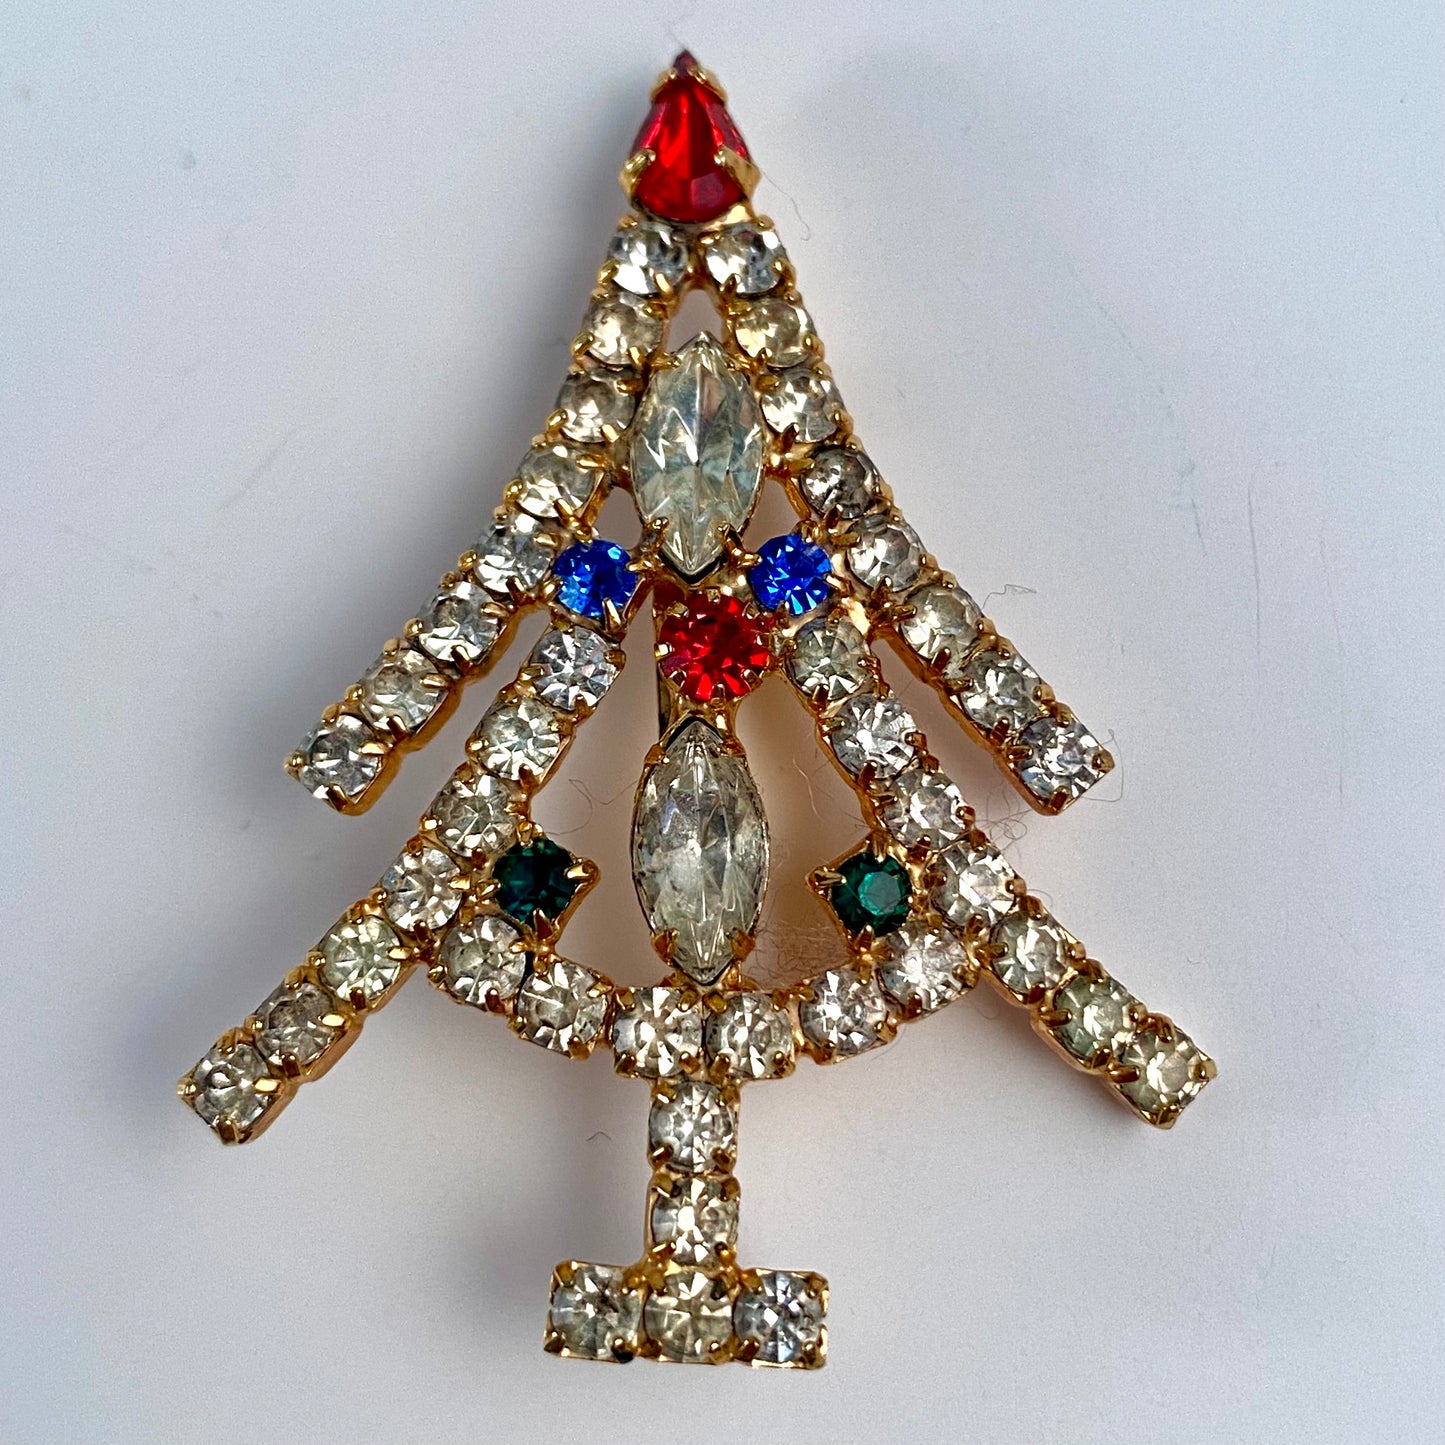 1950s/1960s Rhinestone Christmas Tree Brooch